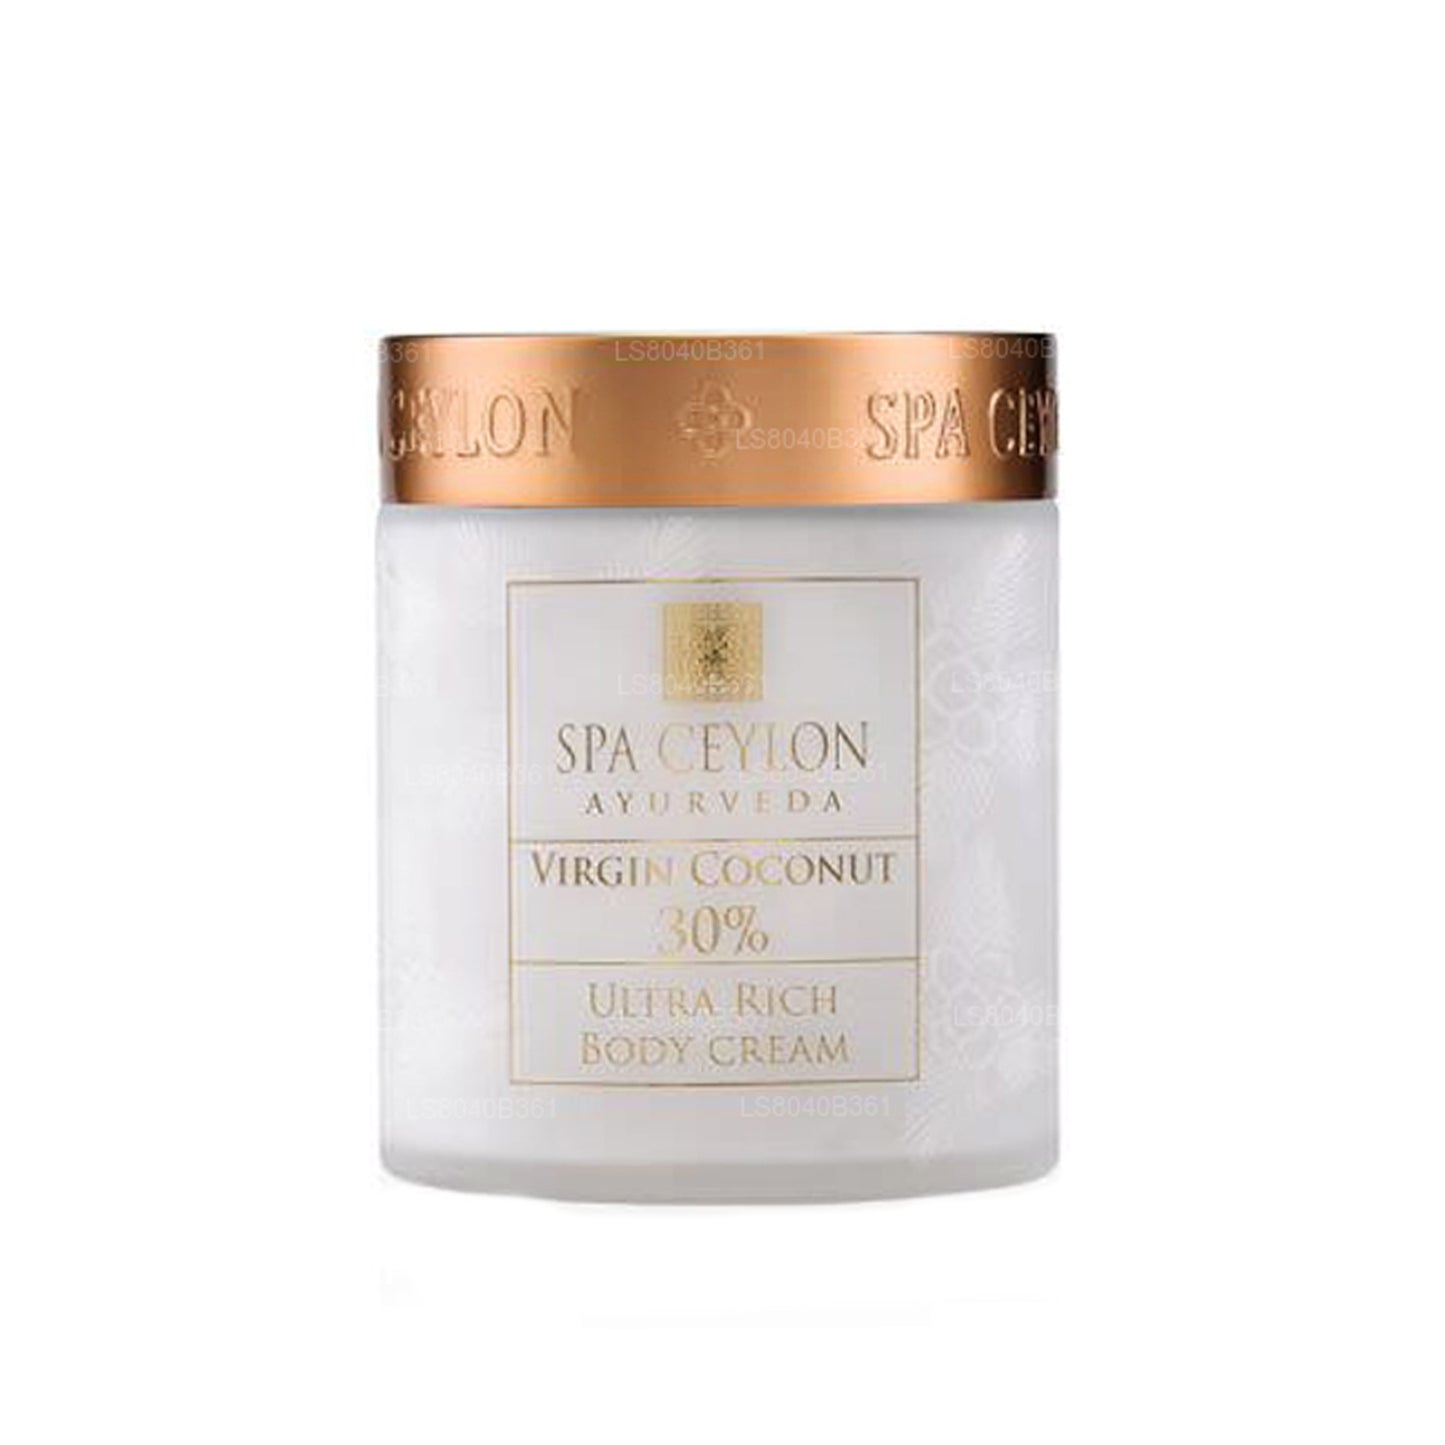 Spa Ceylon Virgin Coconut 30% - Ultra Rich Body Cream (200g)